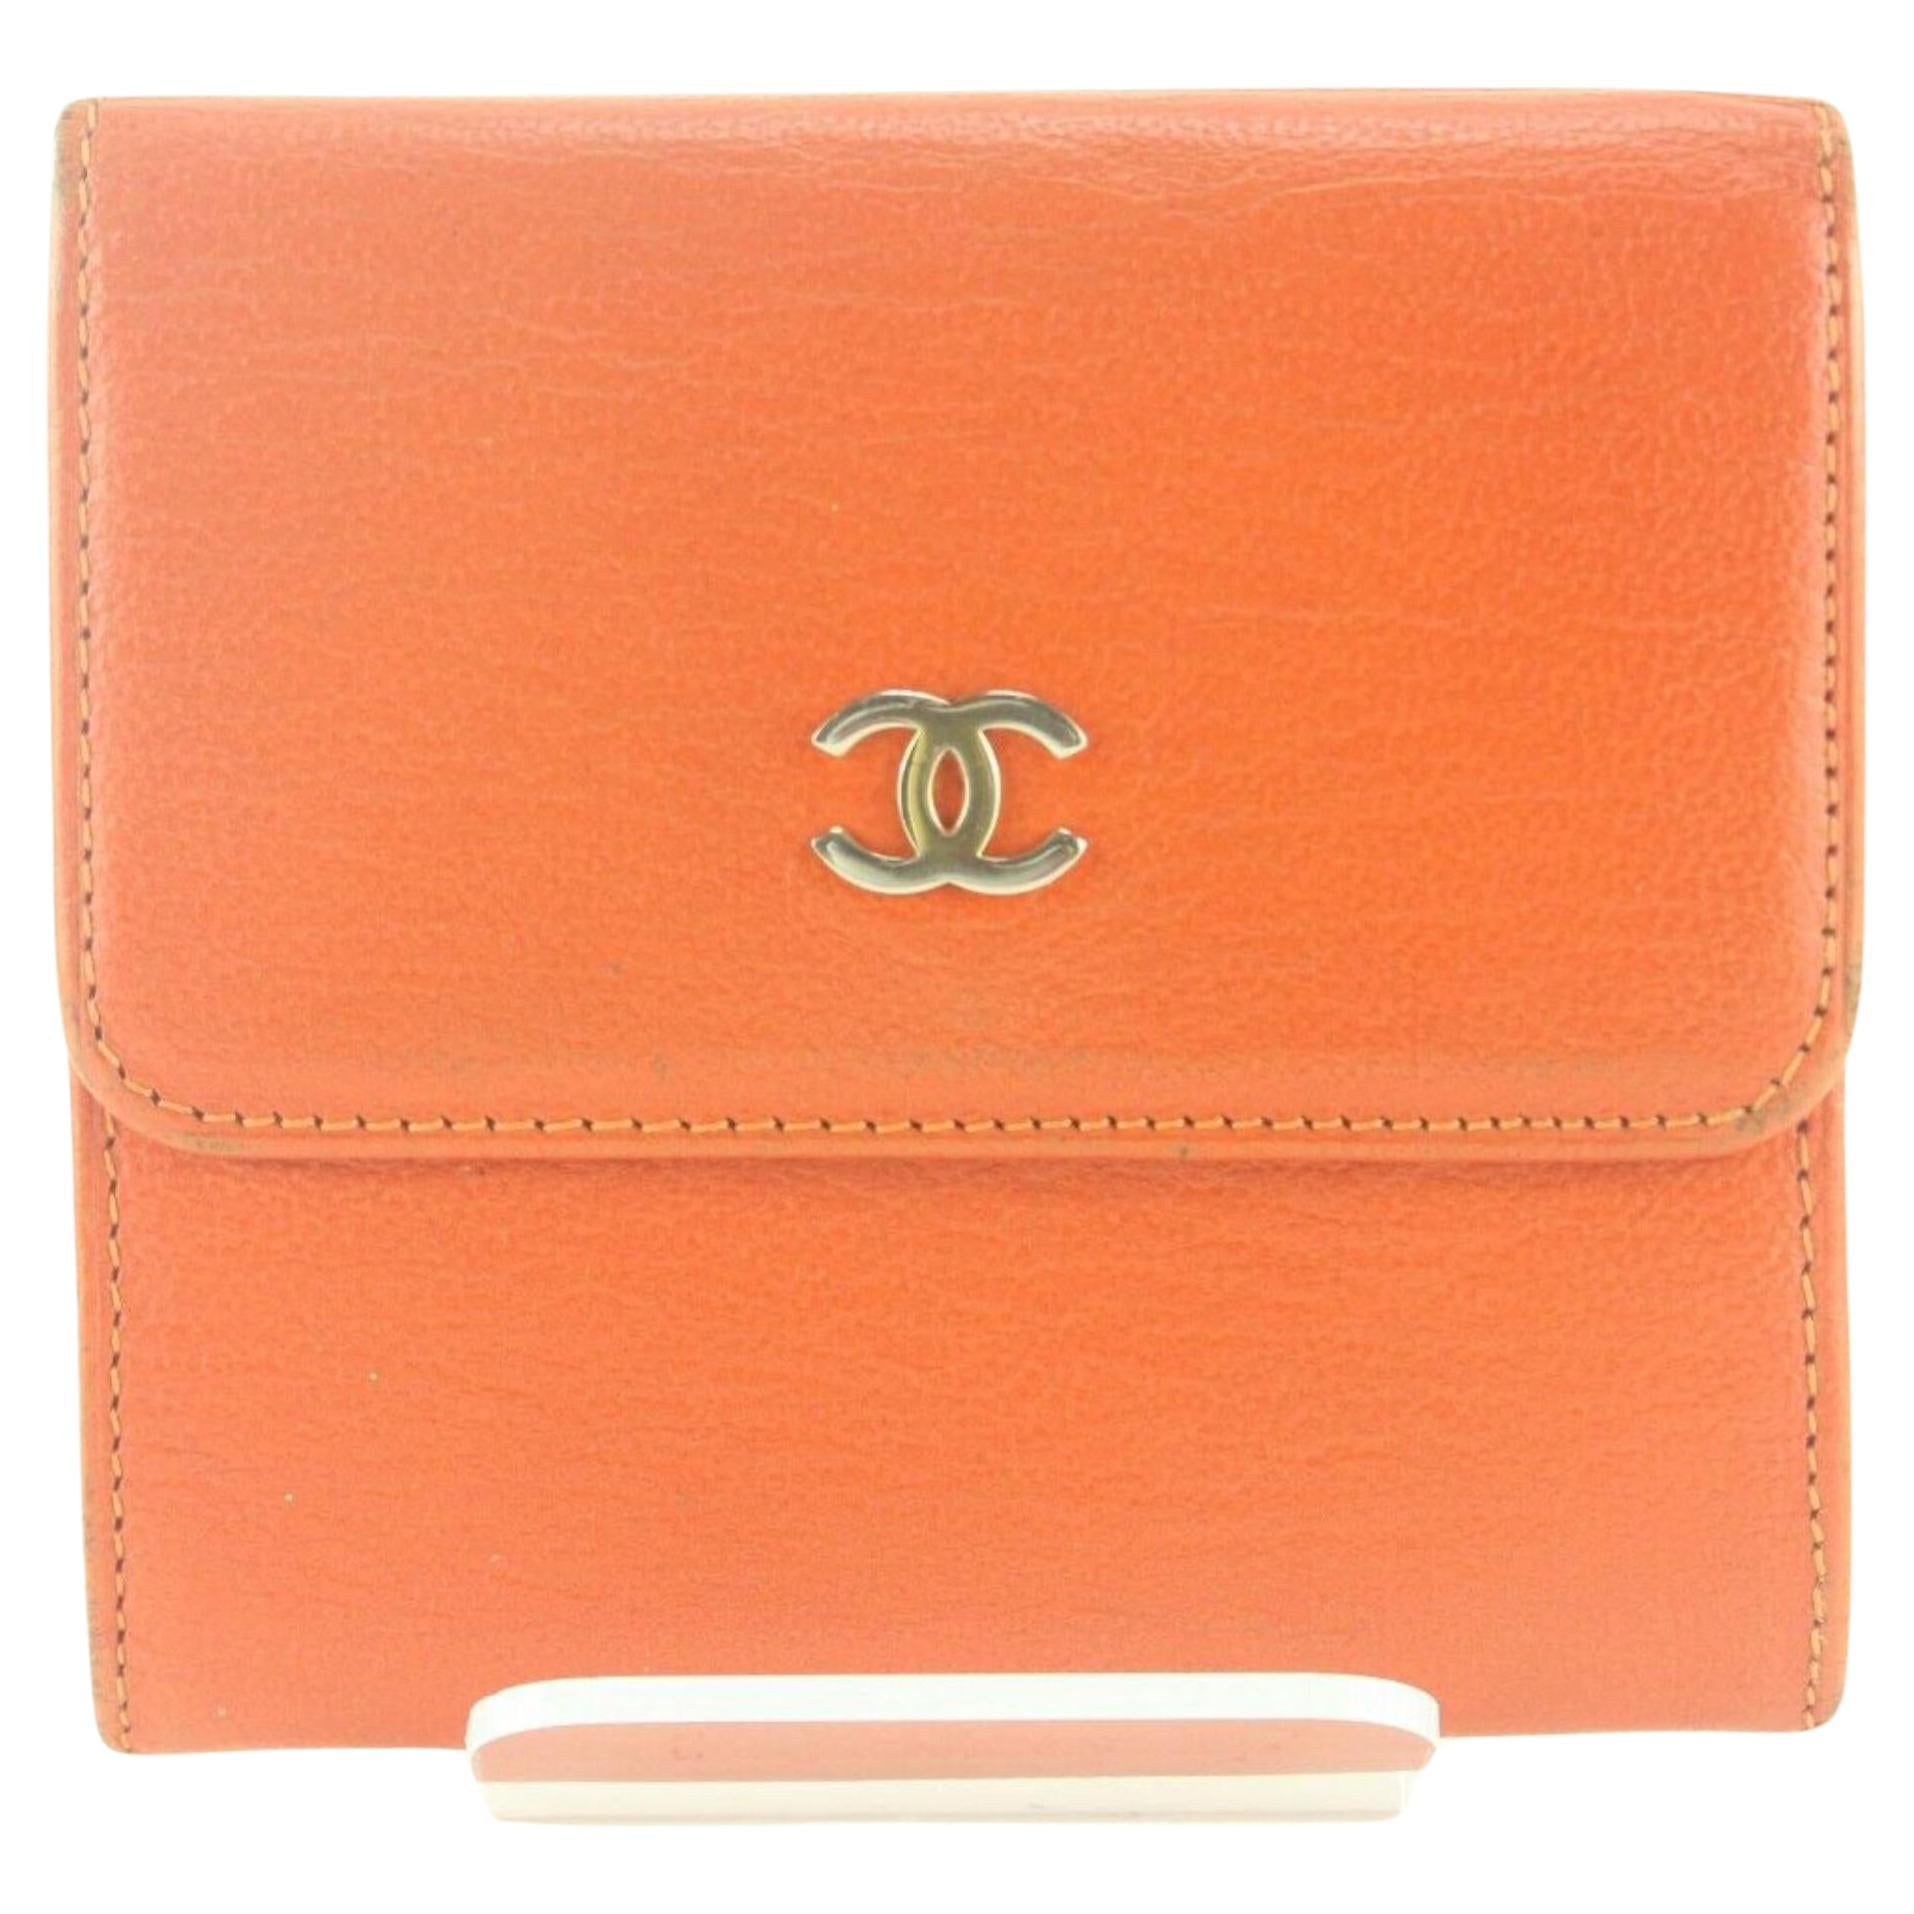 Chanel Orange CC Compact Trifold Wallet 2CC712K For Sale